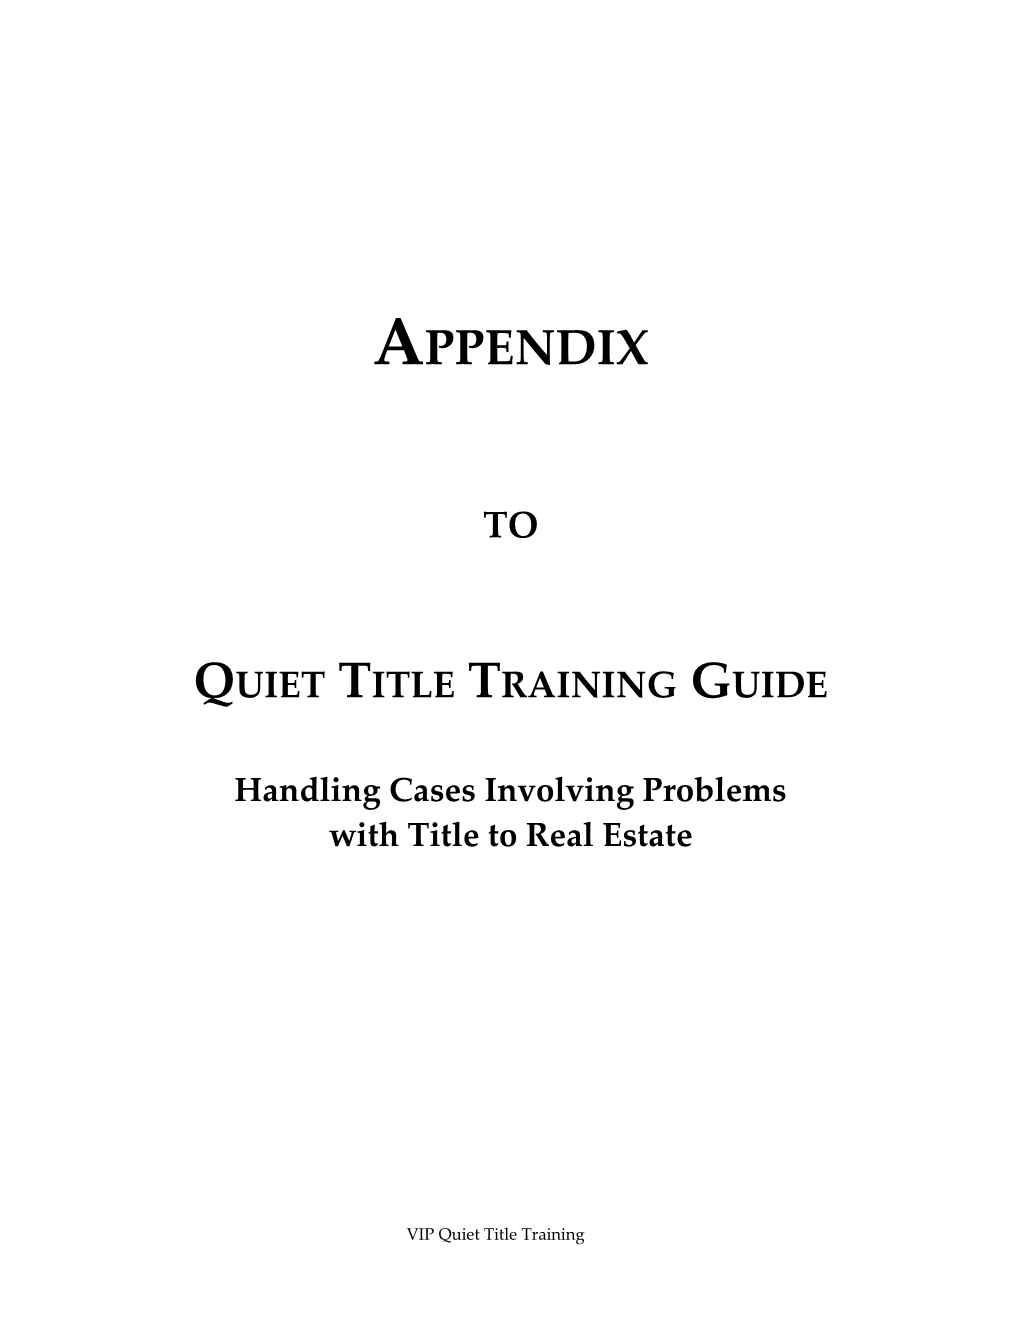 Quiet Title Training Guide